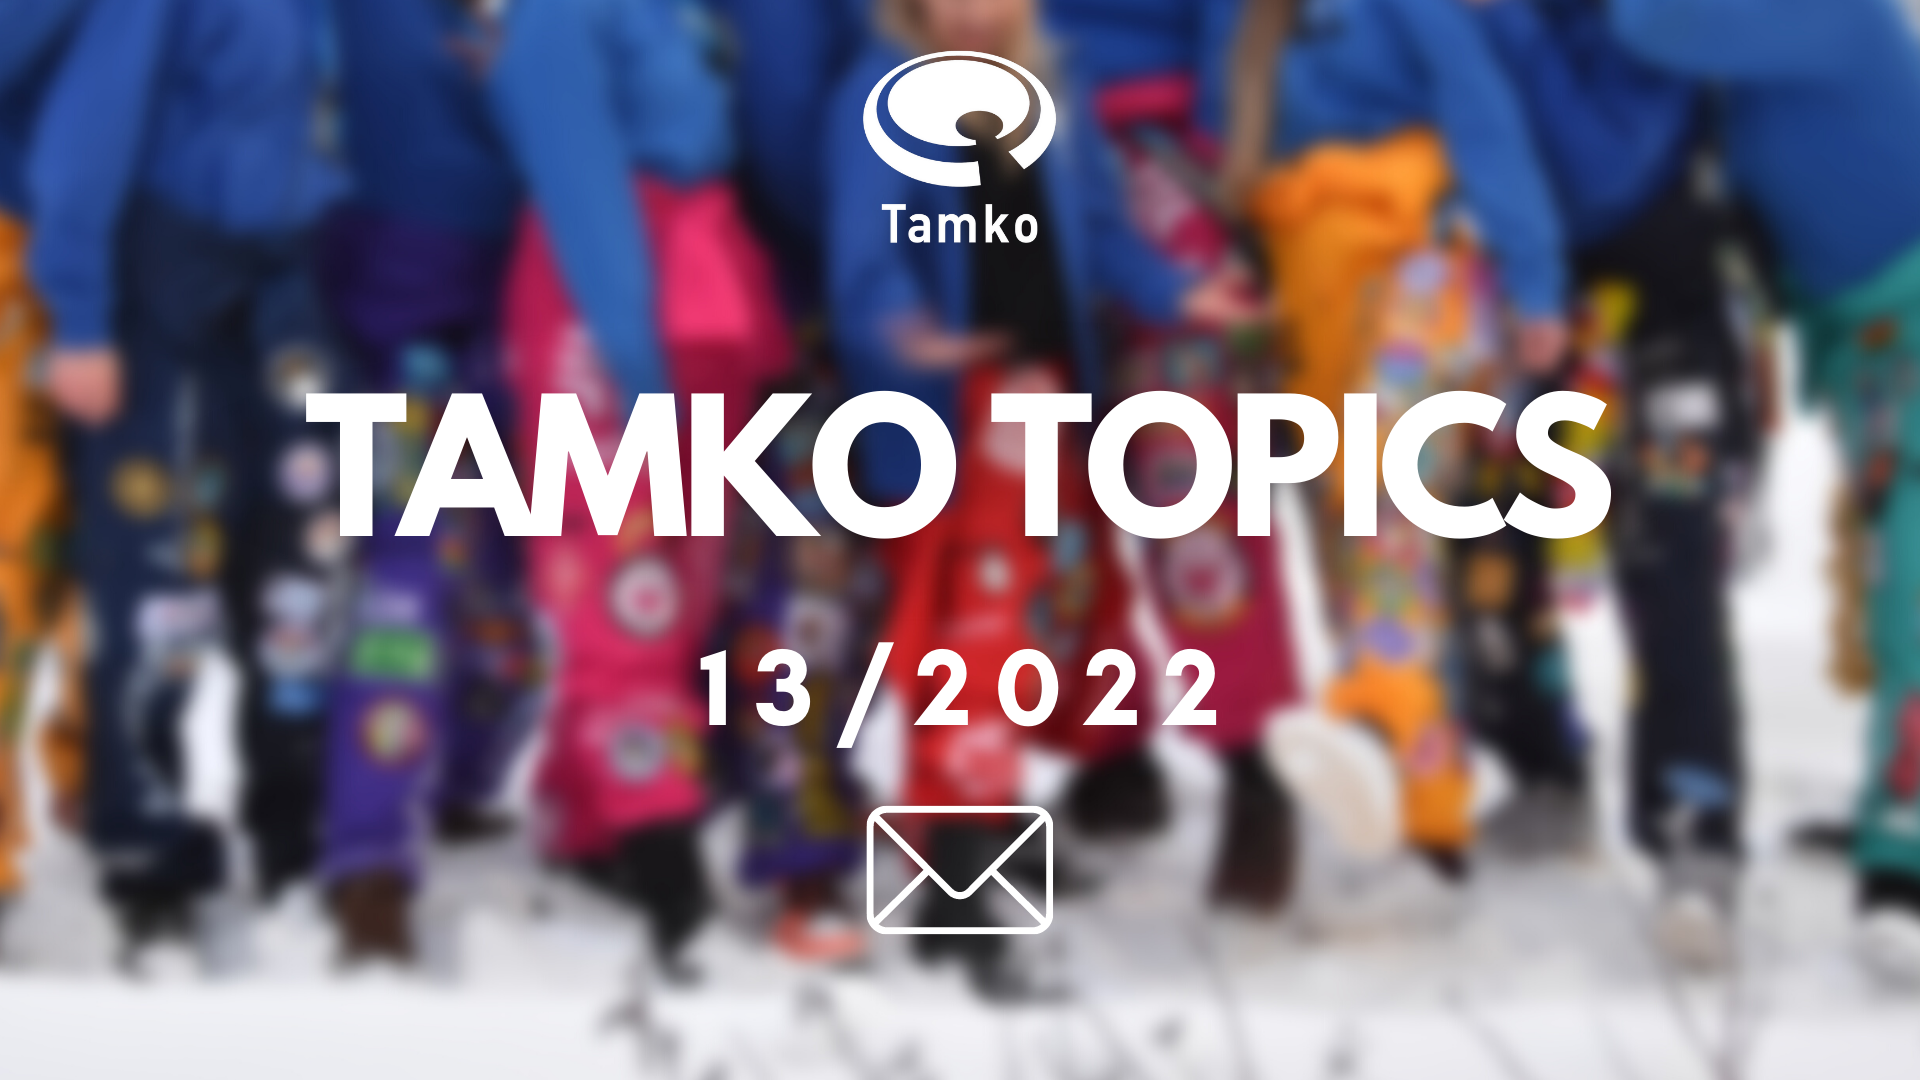 TAMKO TOPICS 13/2022